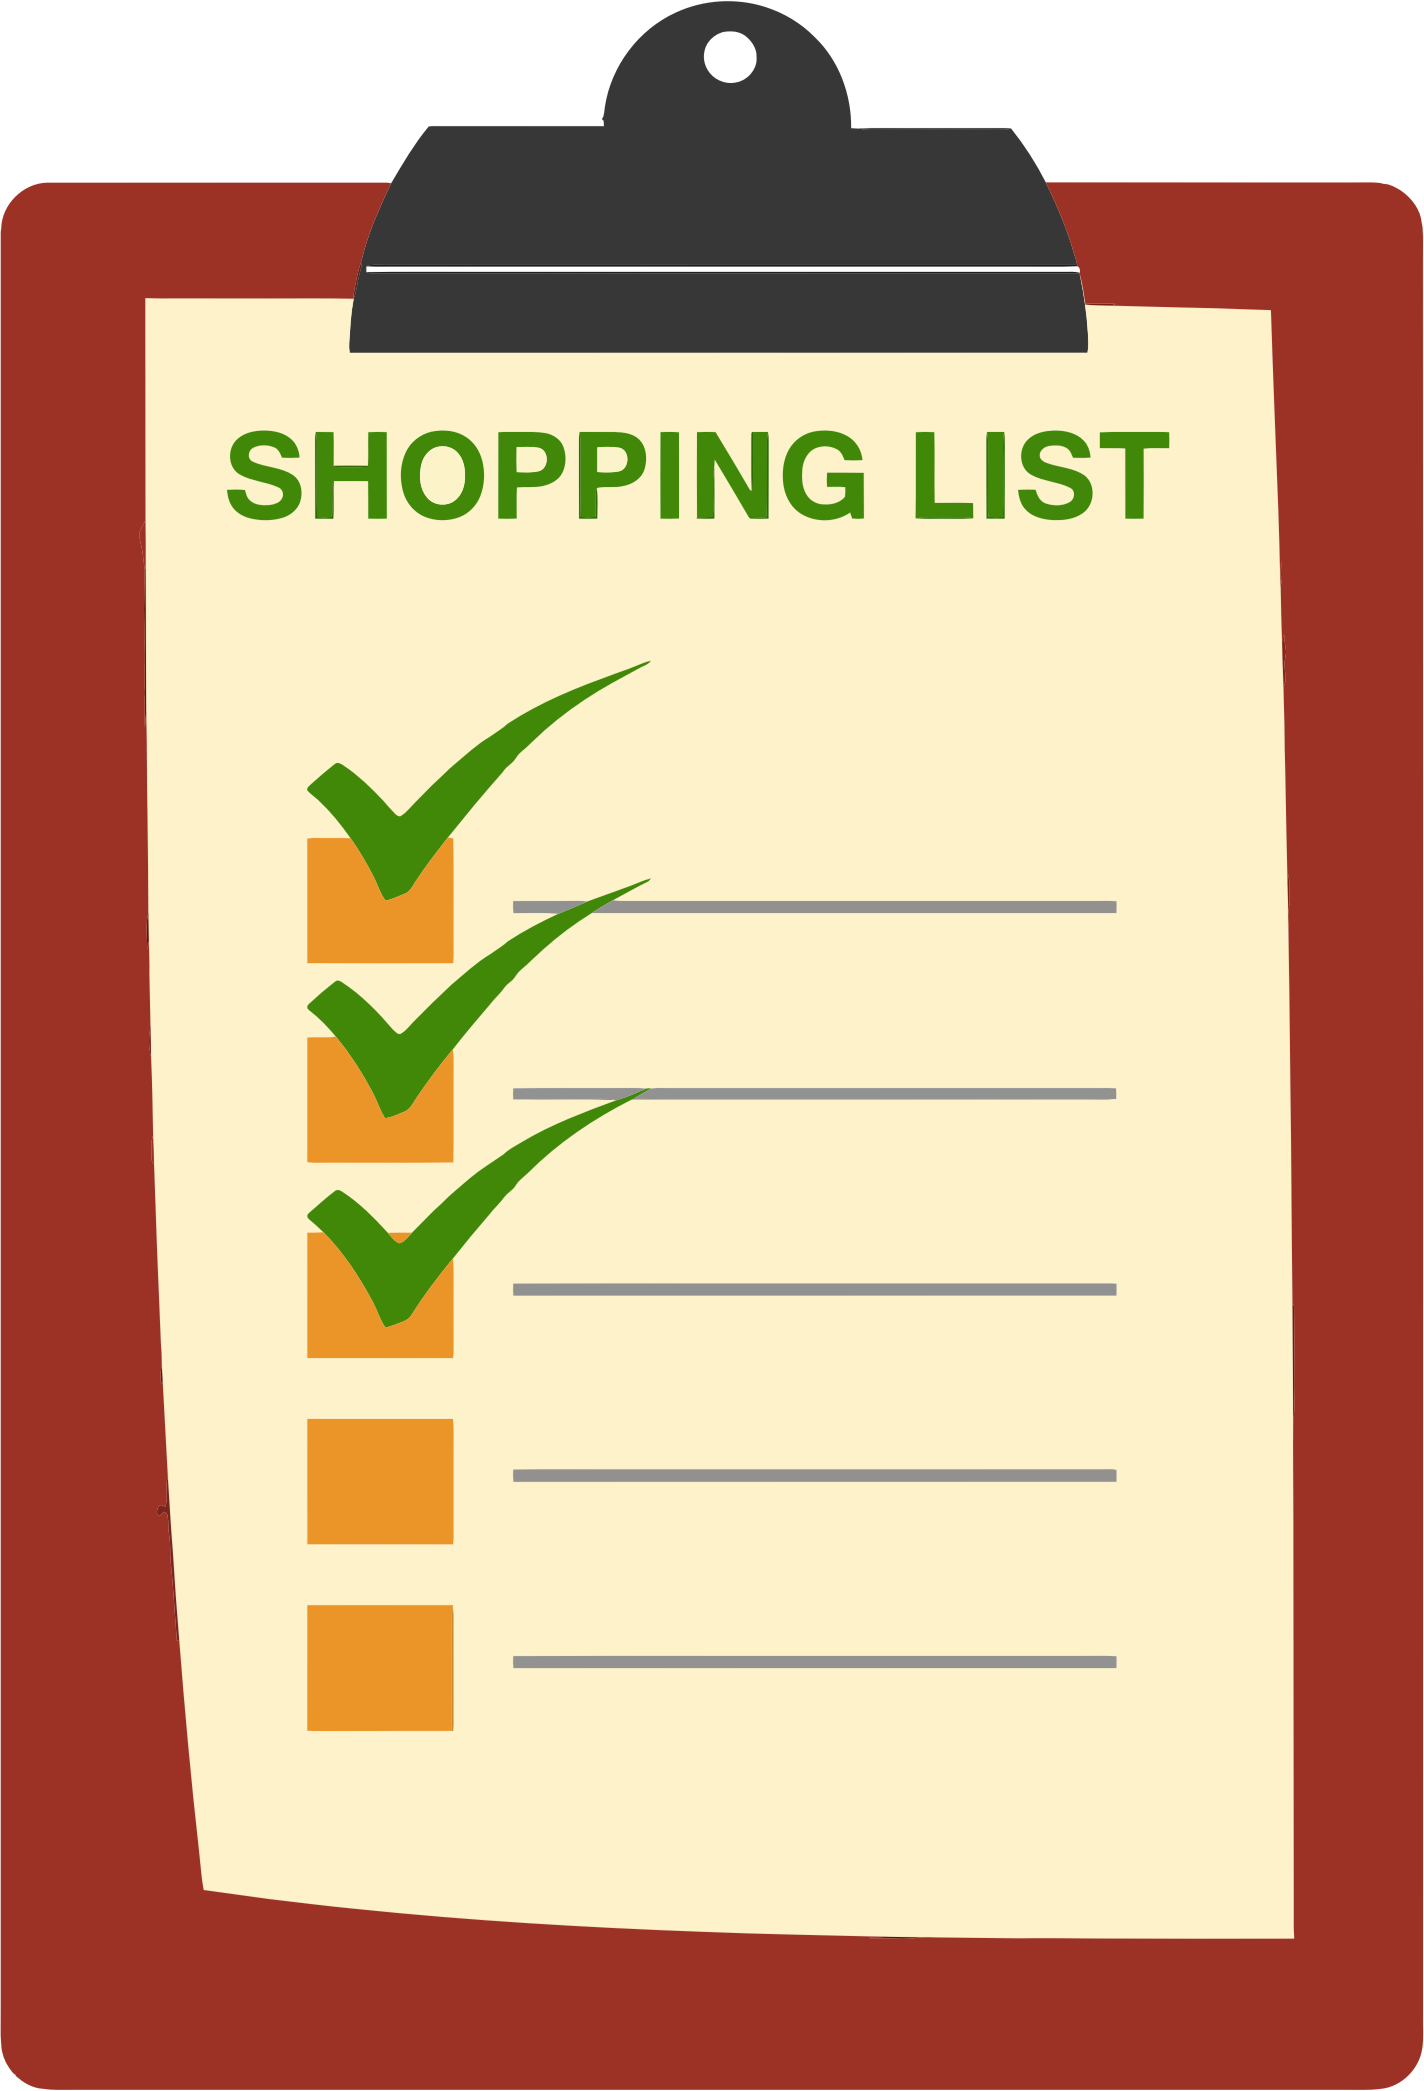 Shopping list. Список покупок. Список покупок картинка. Shopping list шаблон.